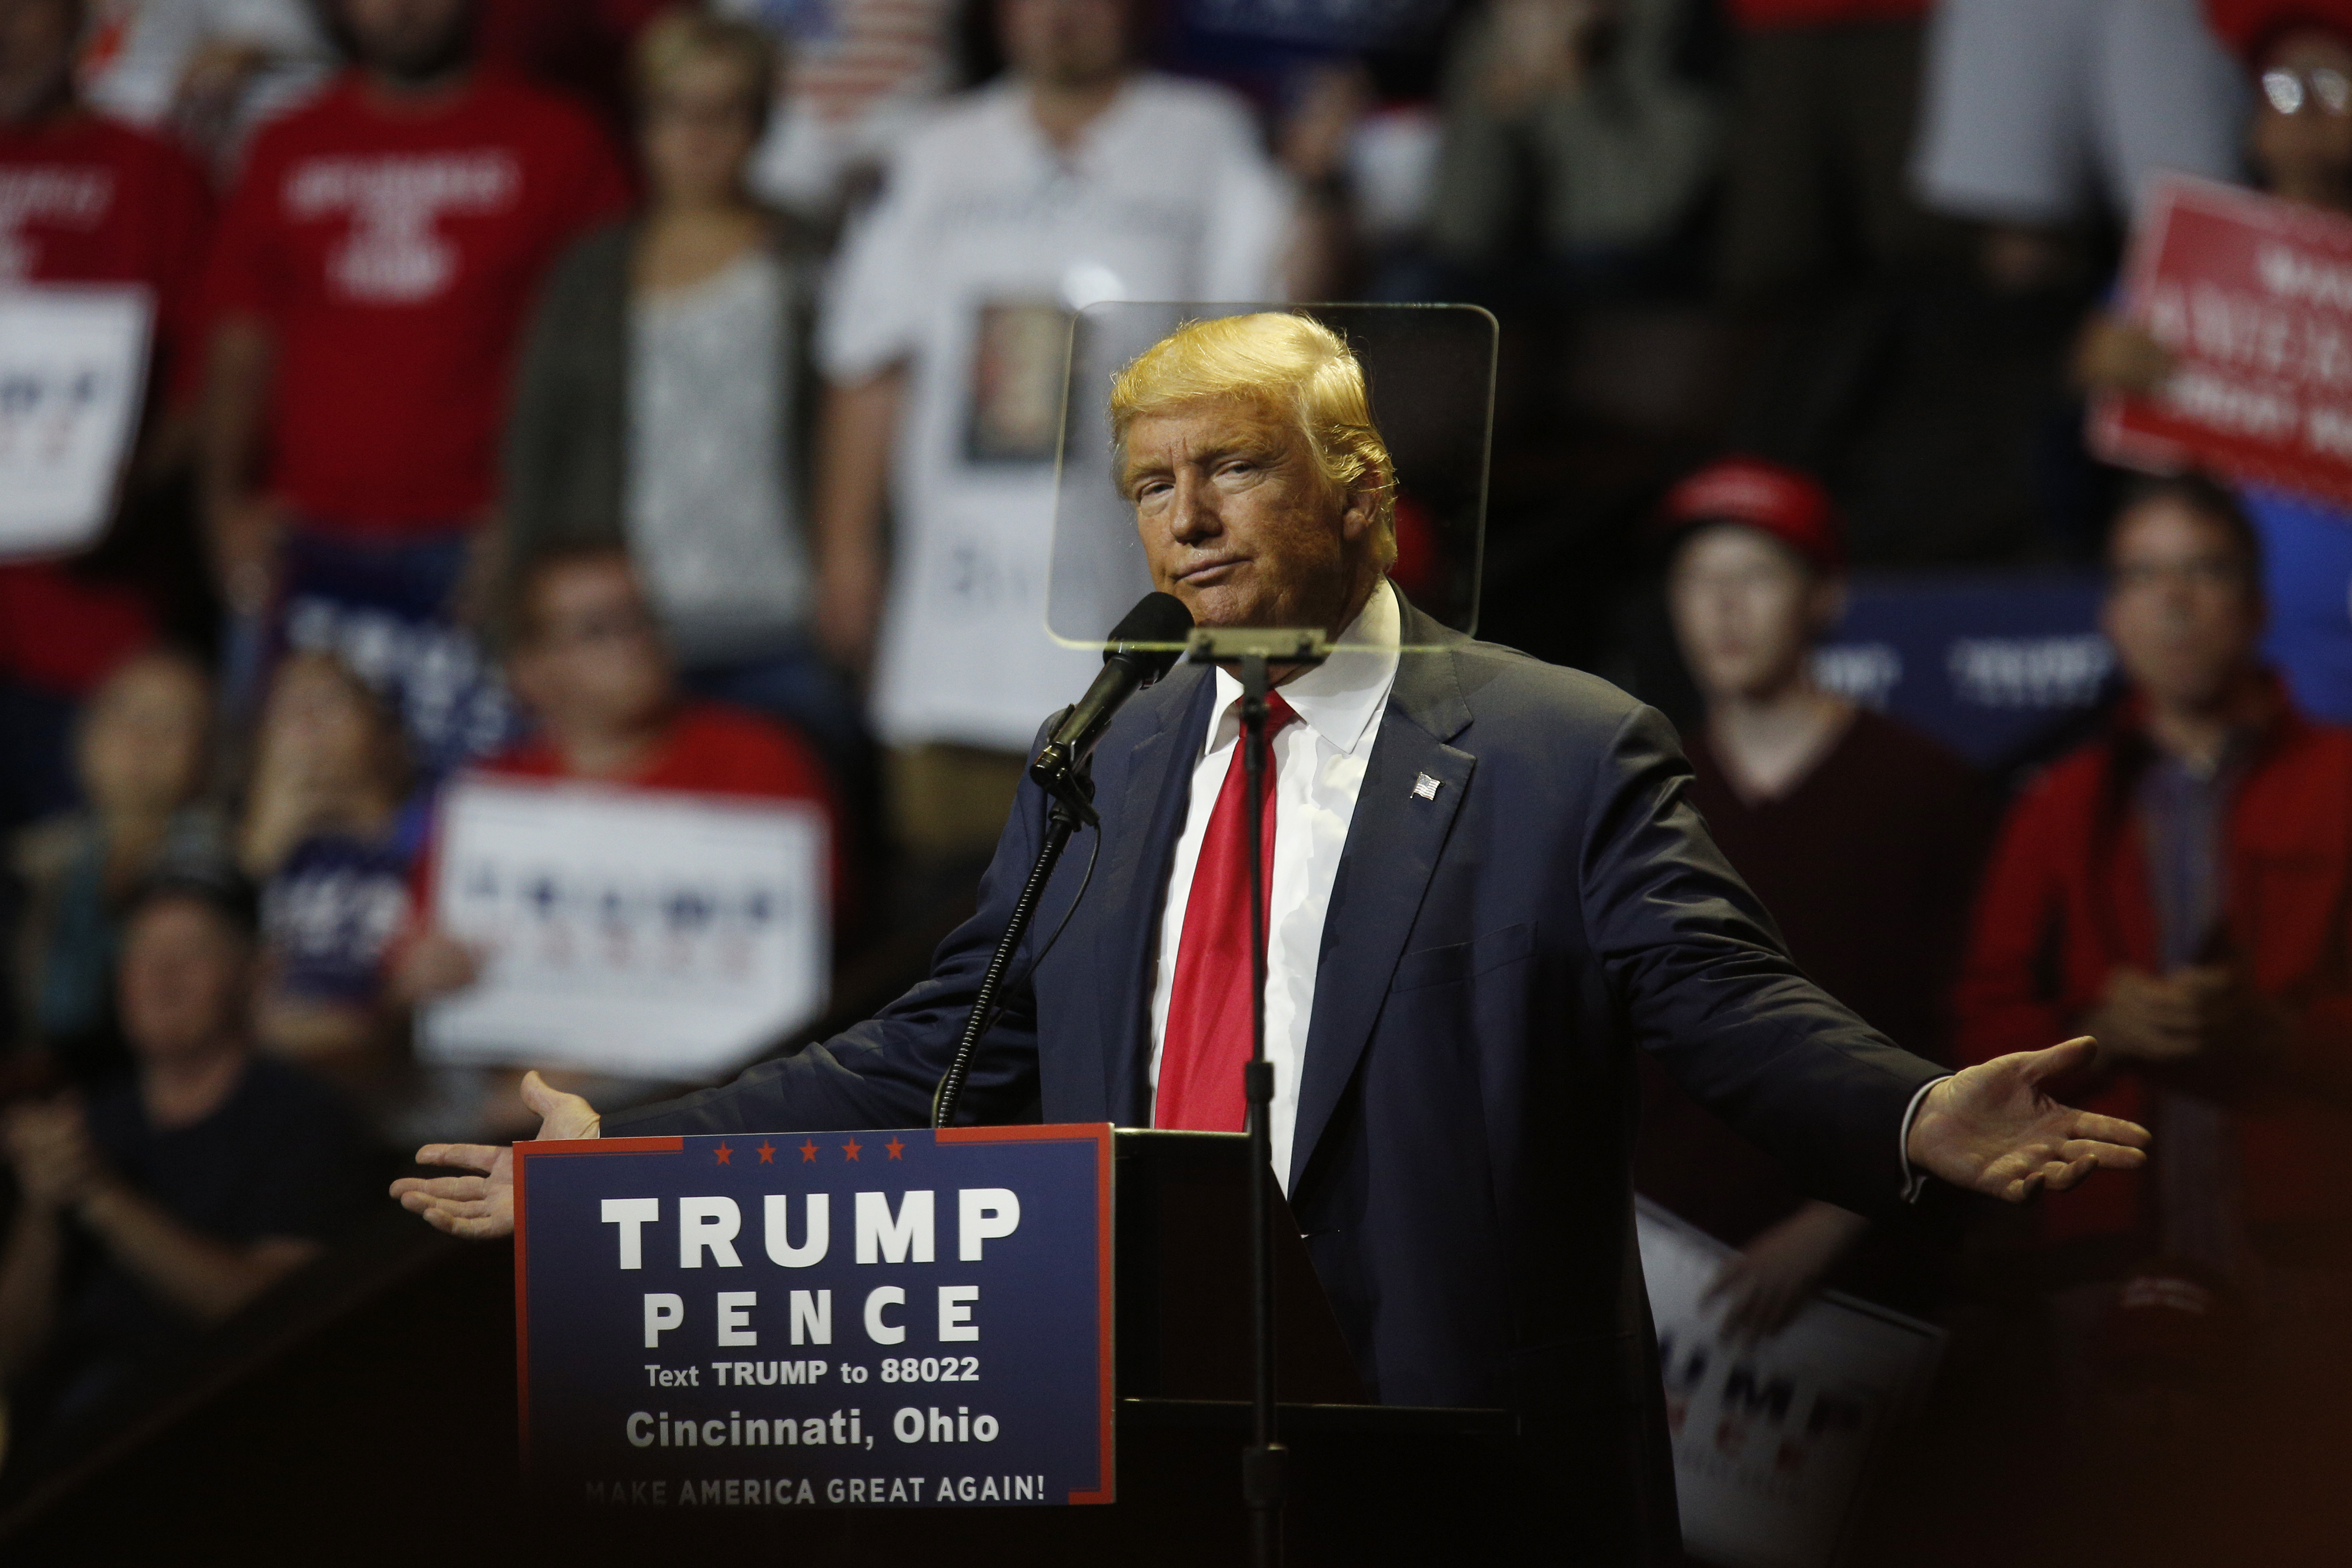 Donald Trump speaks during a campaign event in Cincinnati, Ohio, on Oct. 13, 2016.